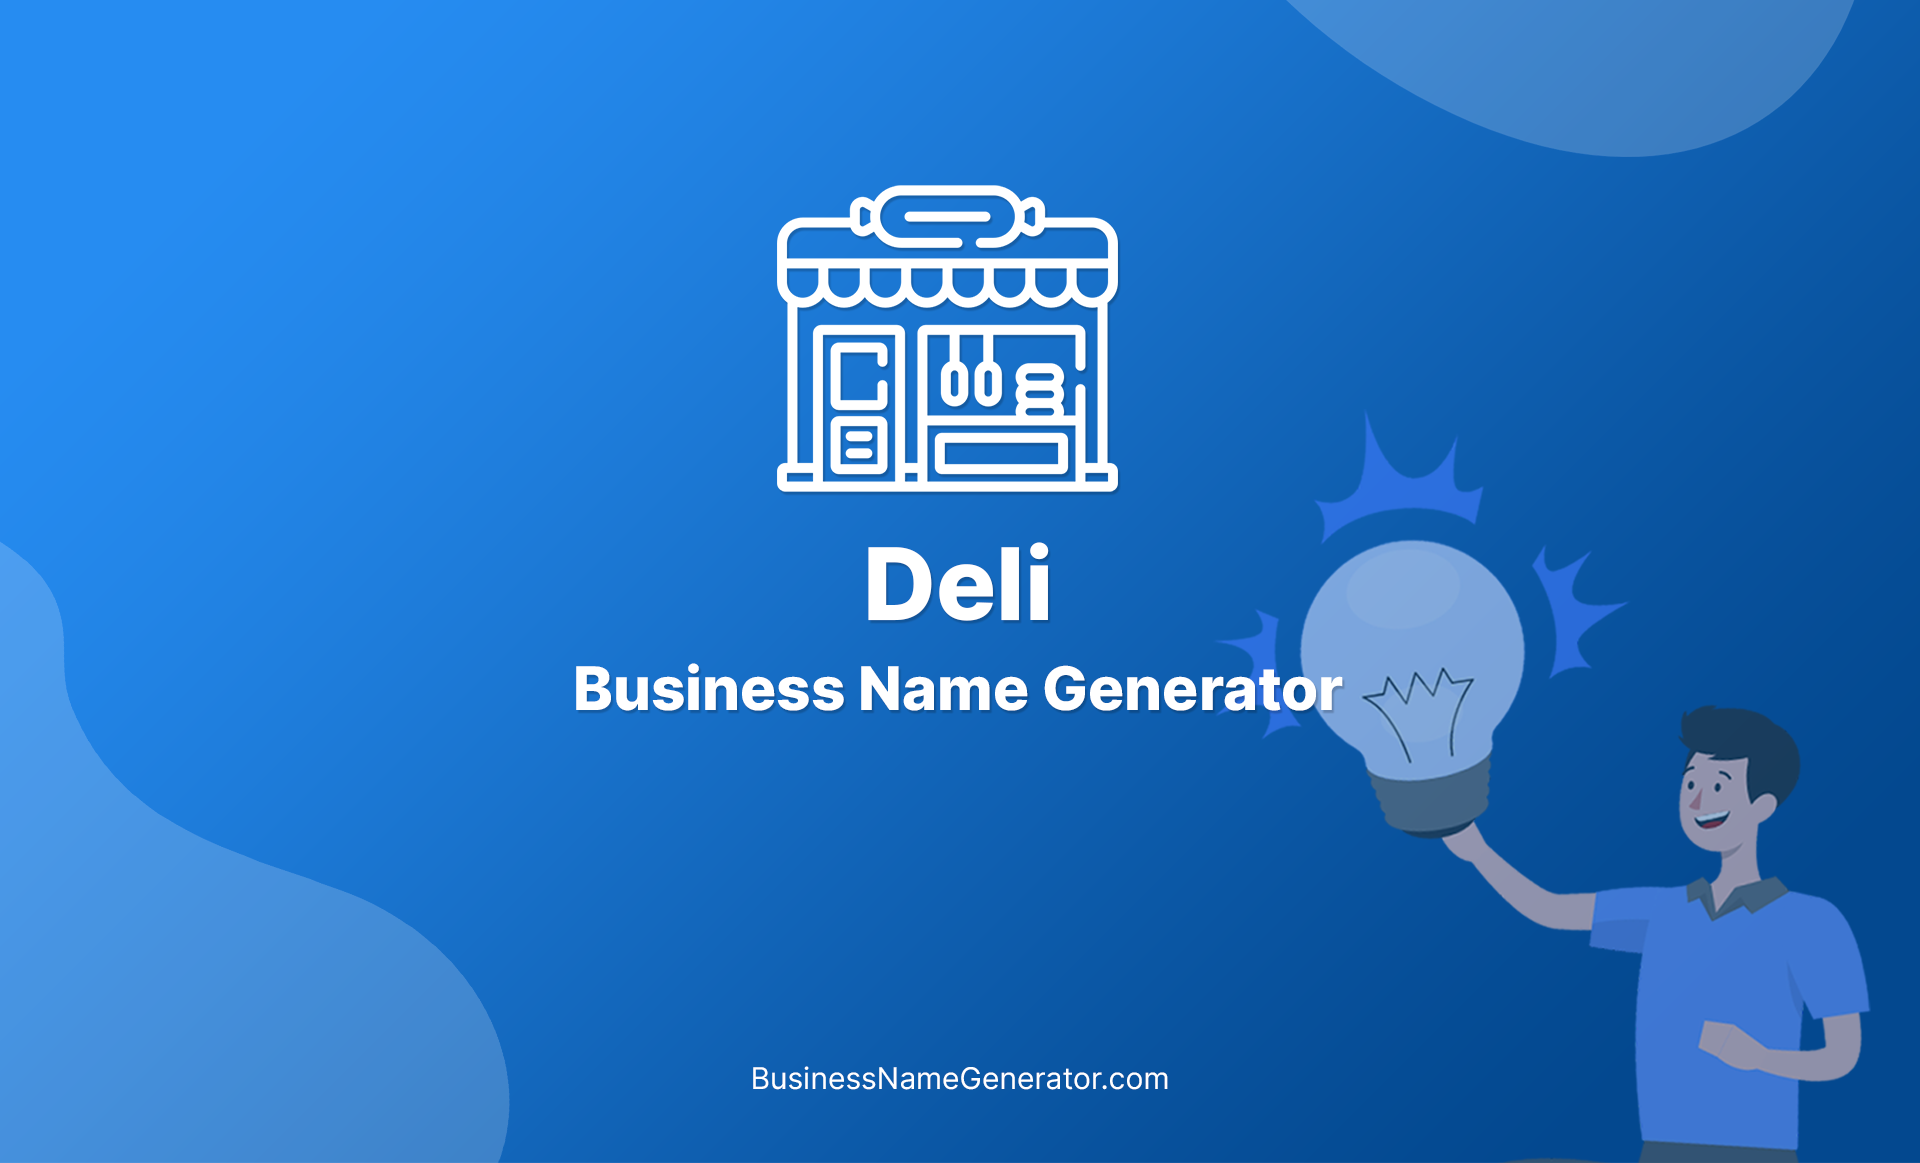 Deli Business Name Generator